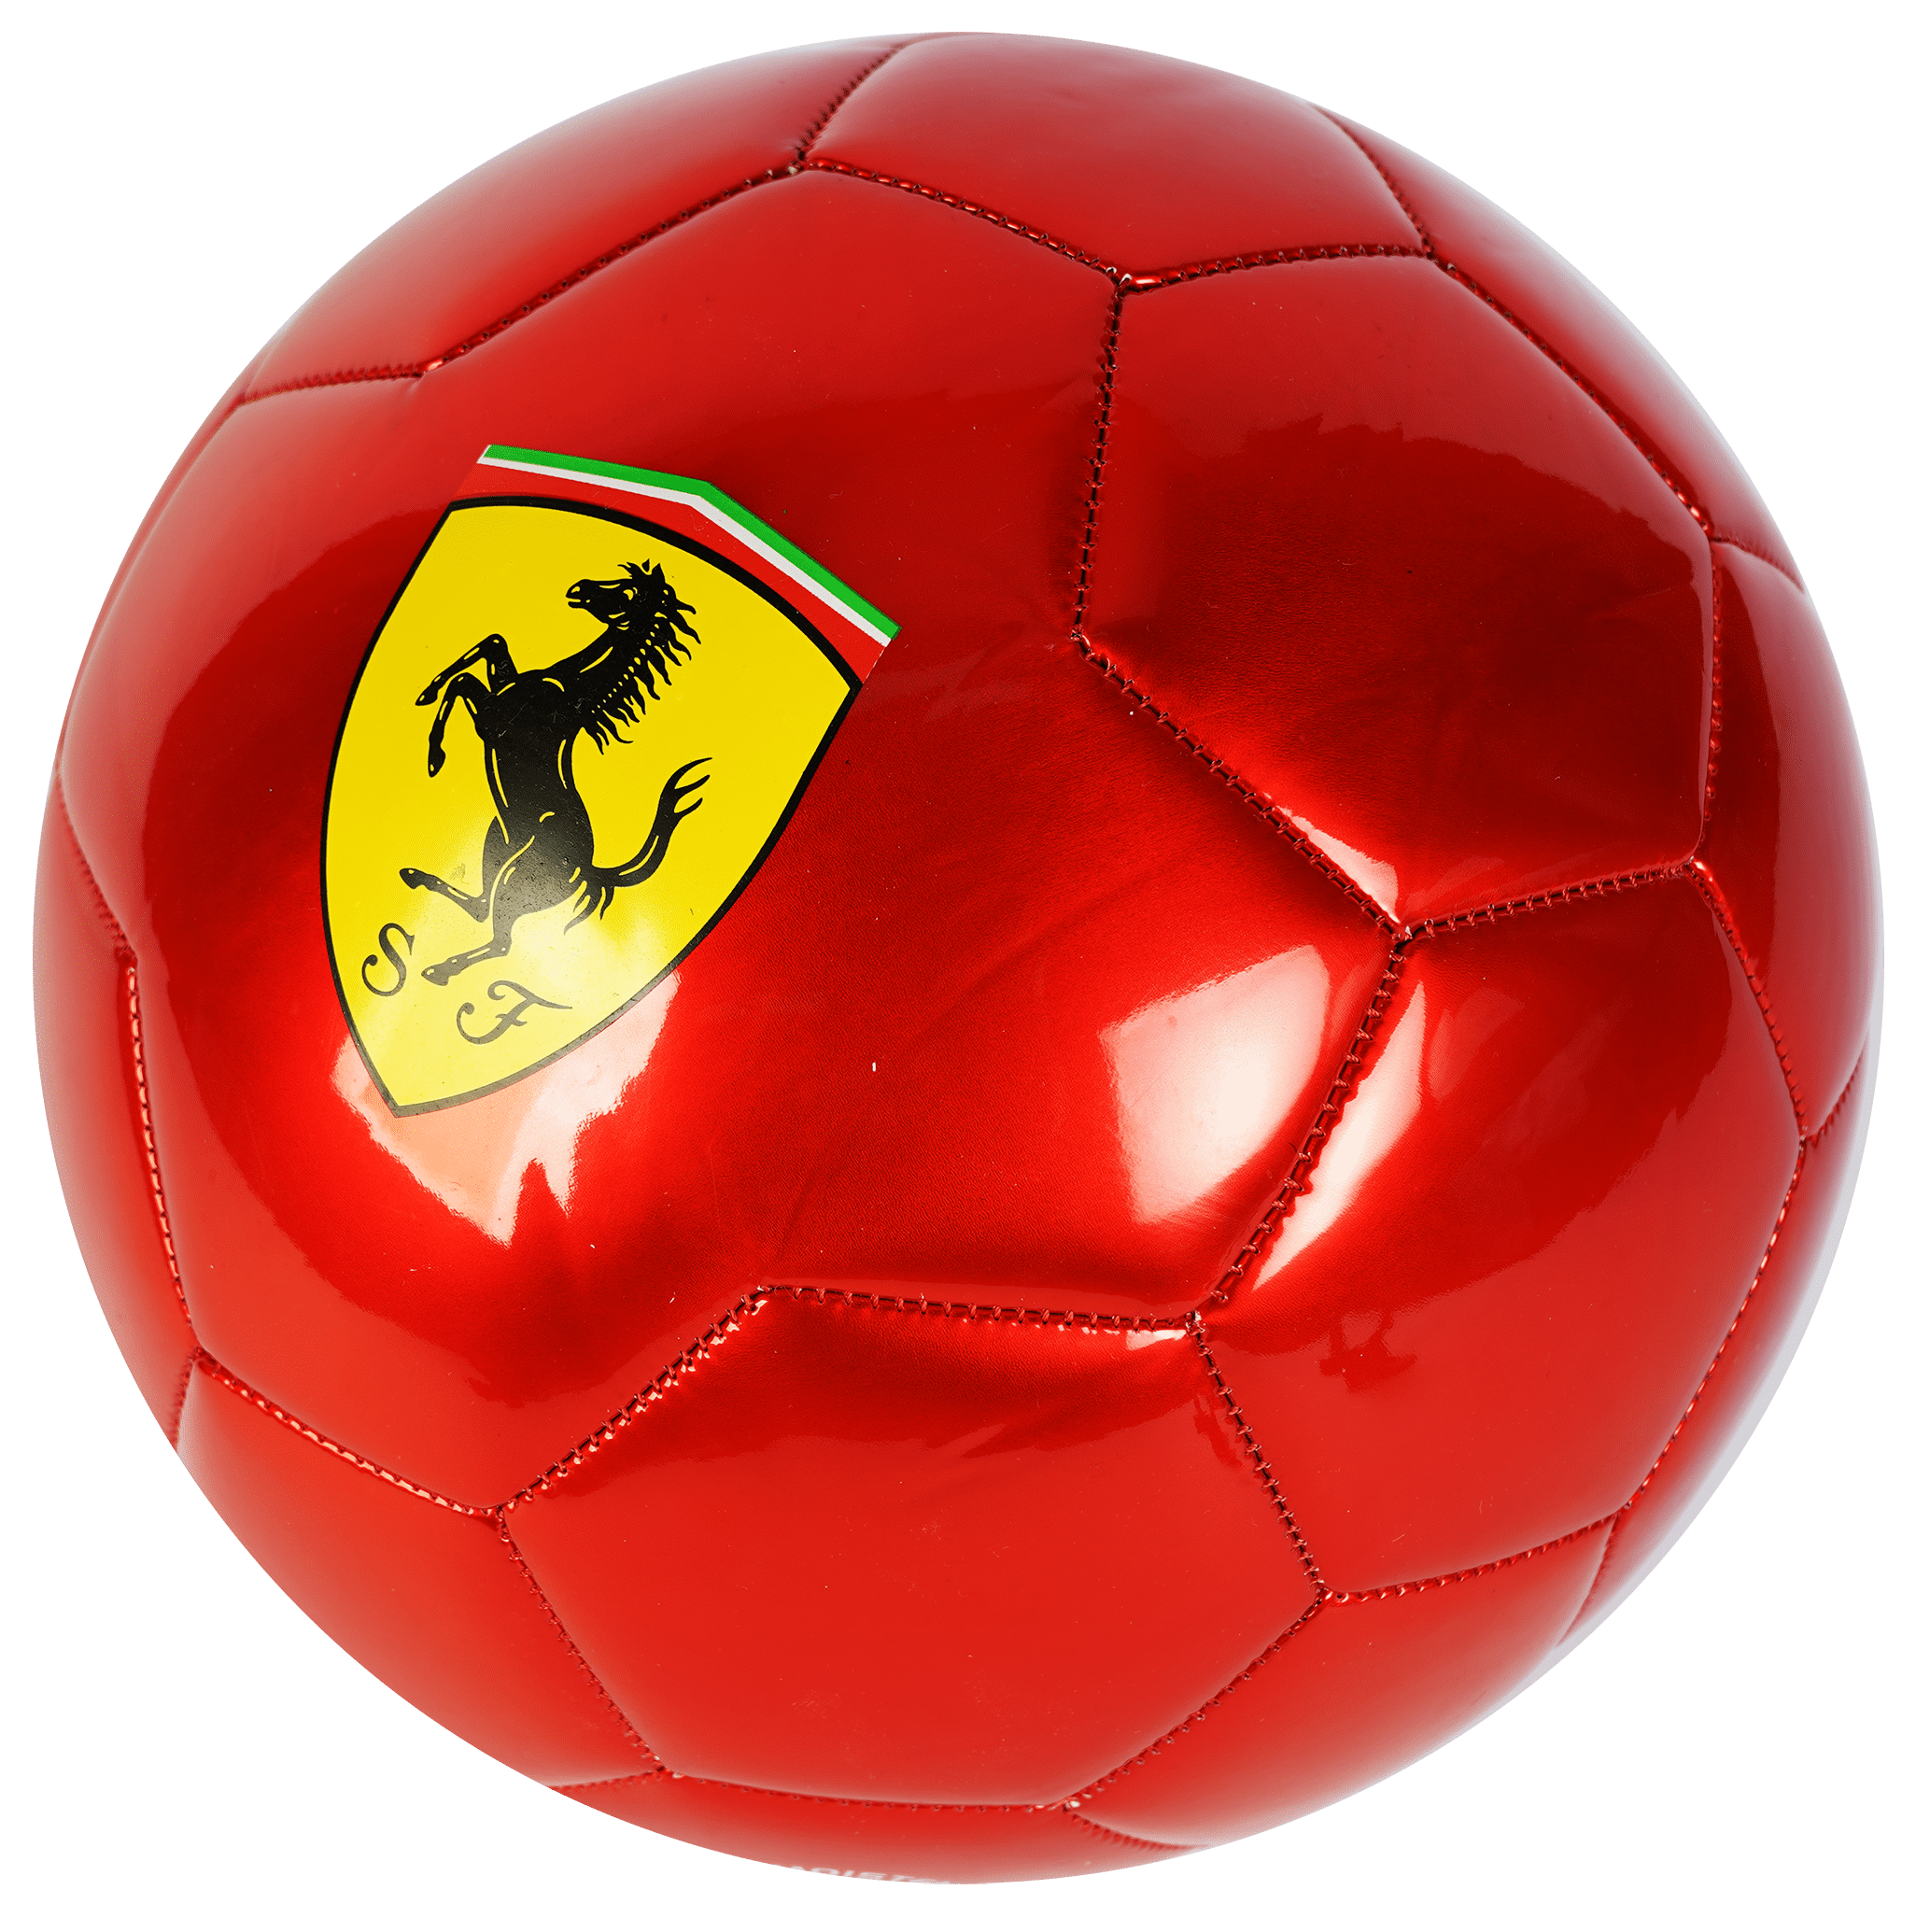 Ferrari Solid Color Size 2 Soccer Ball Black - Macanoco and Co.